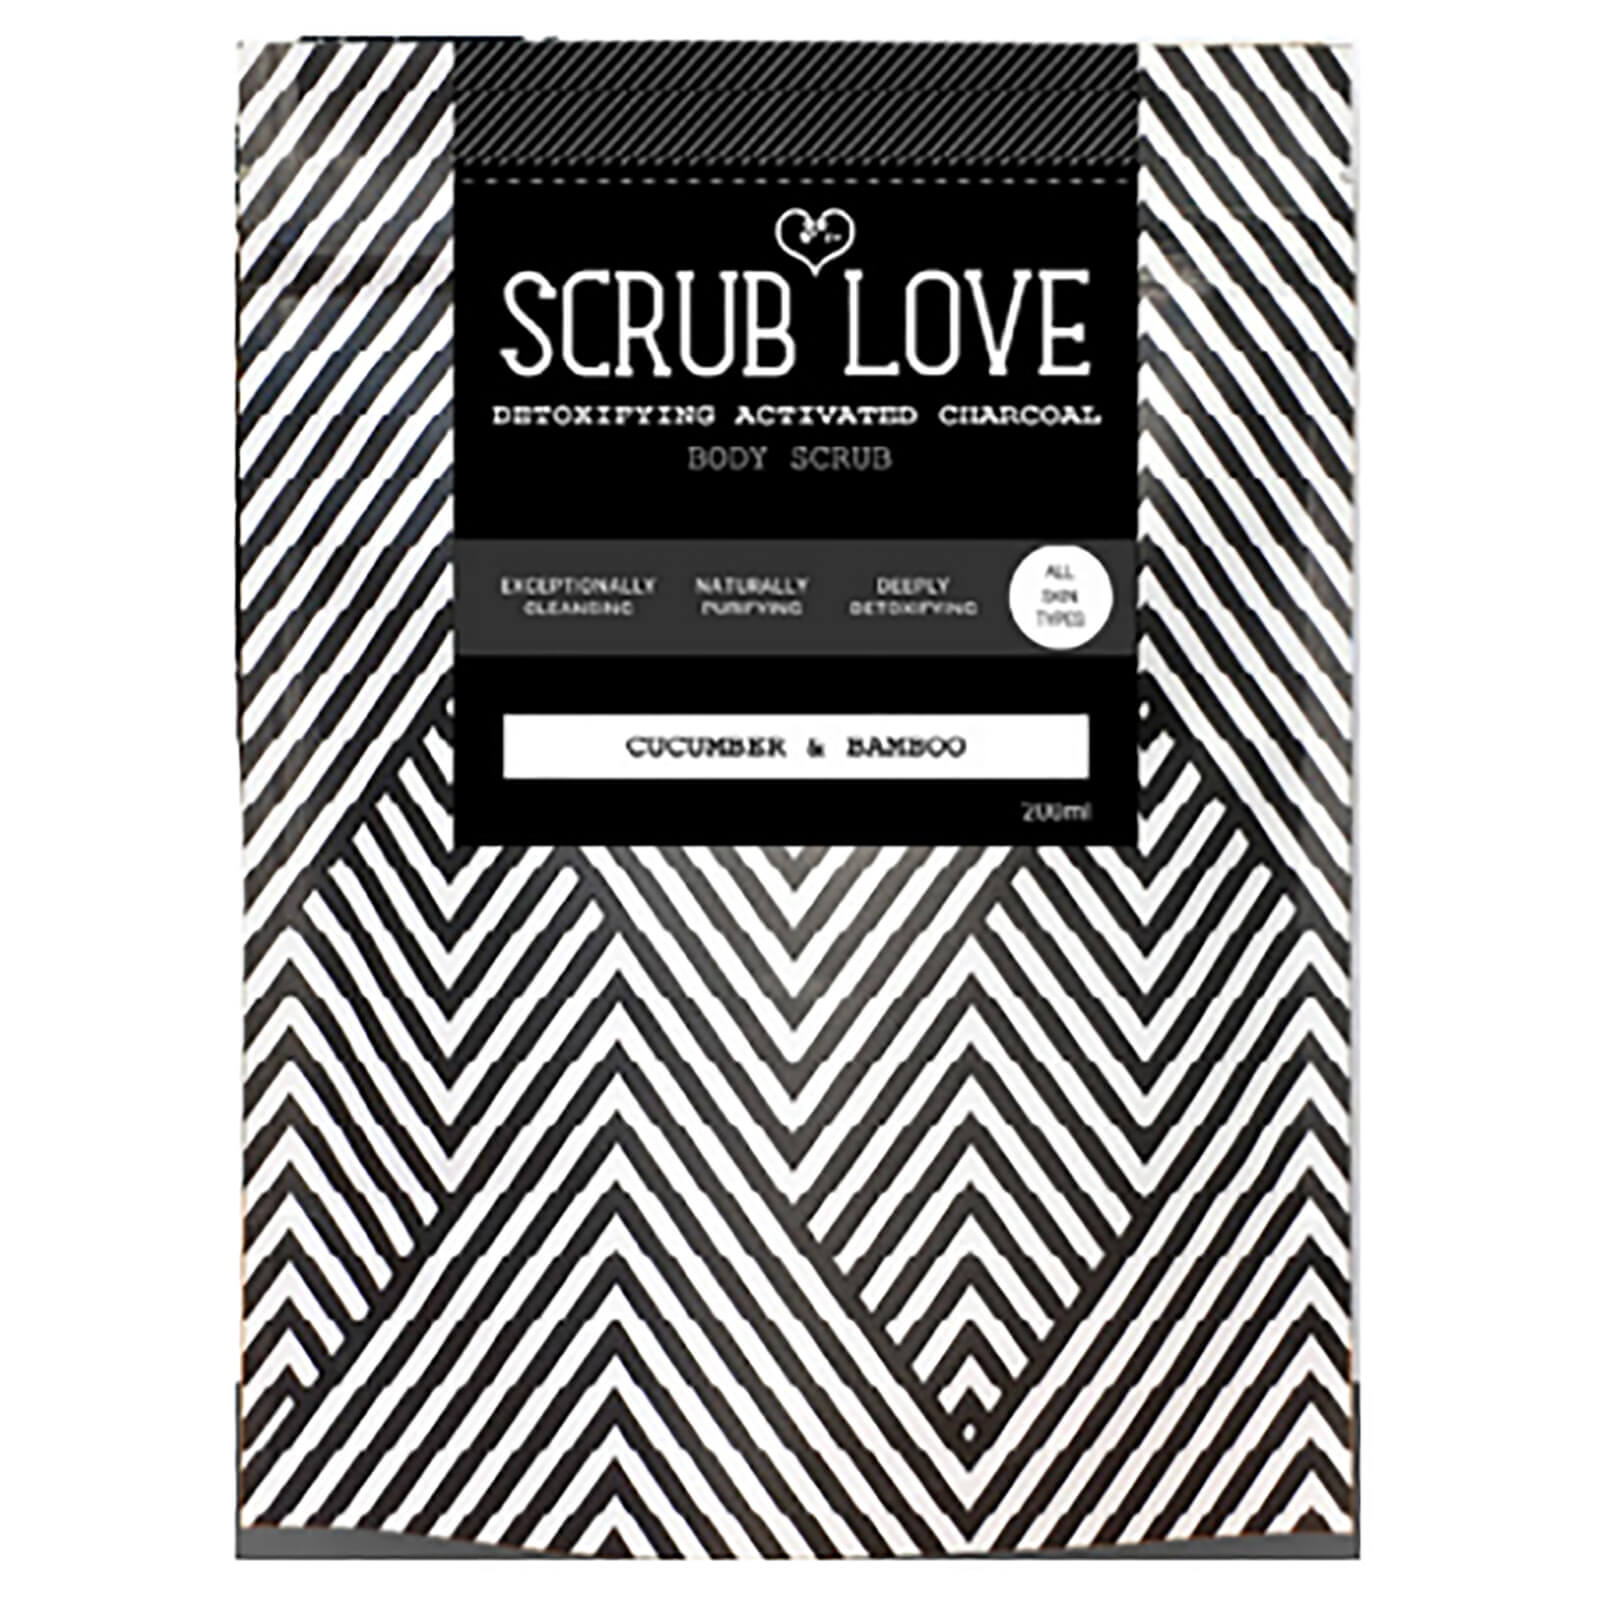 Scrub Love Active Charcoal Body Scrub - Cucumber & Bamboo